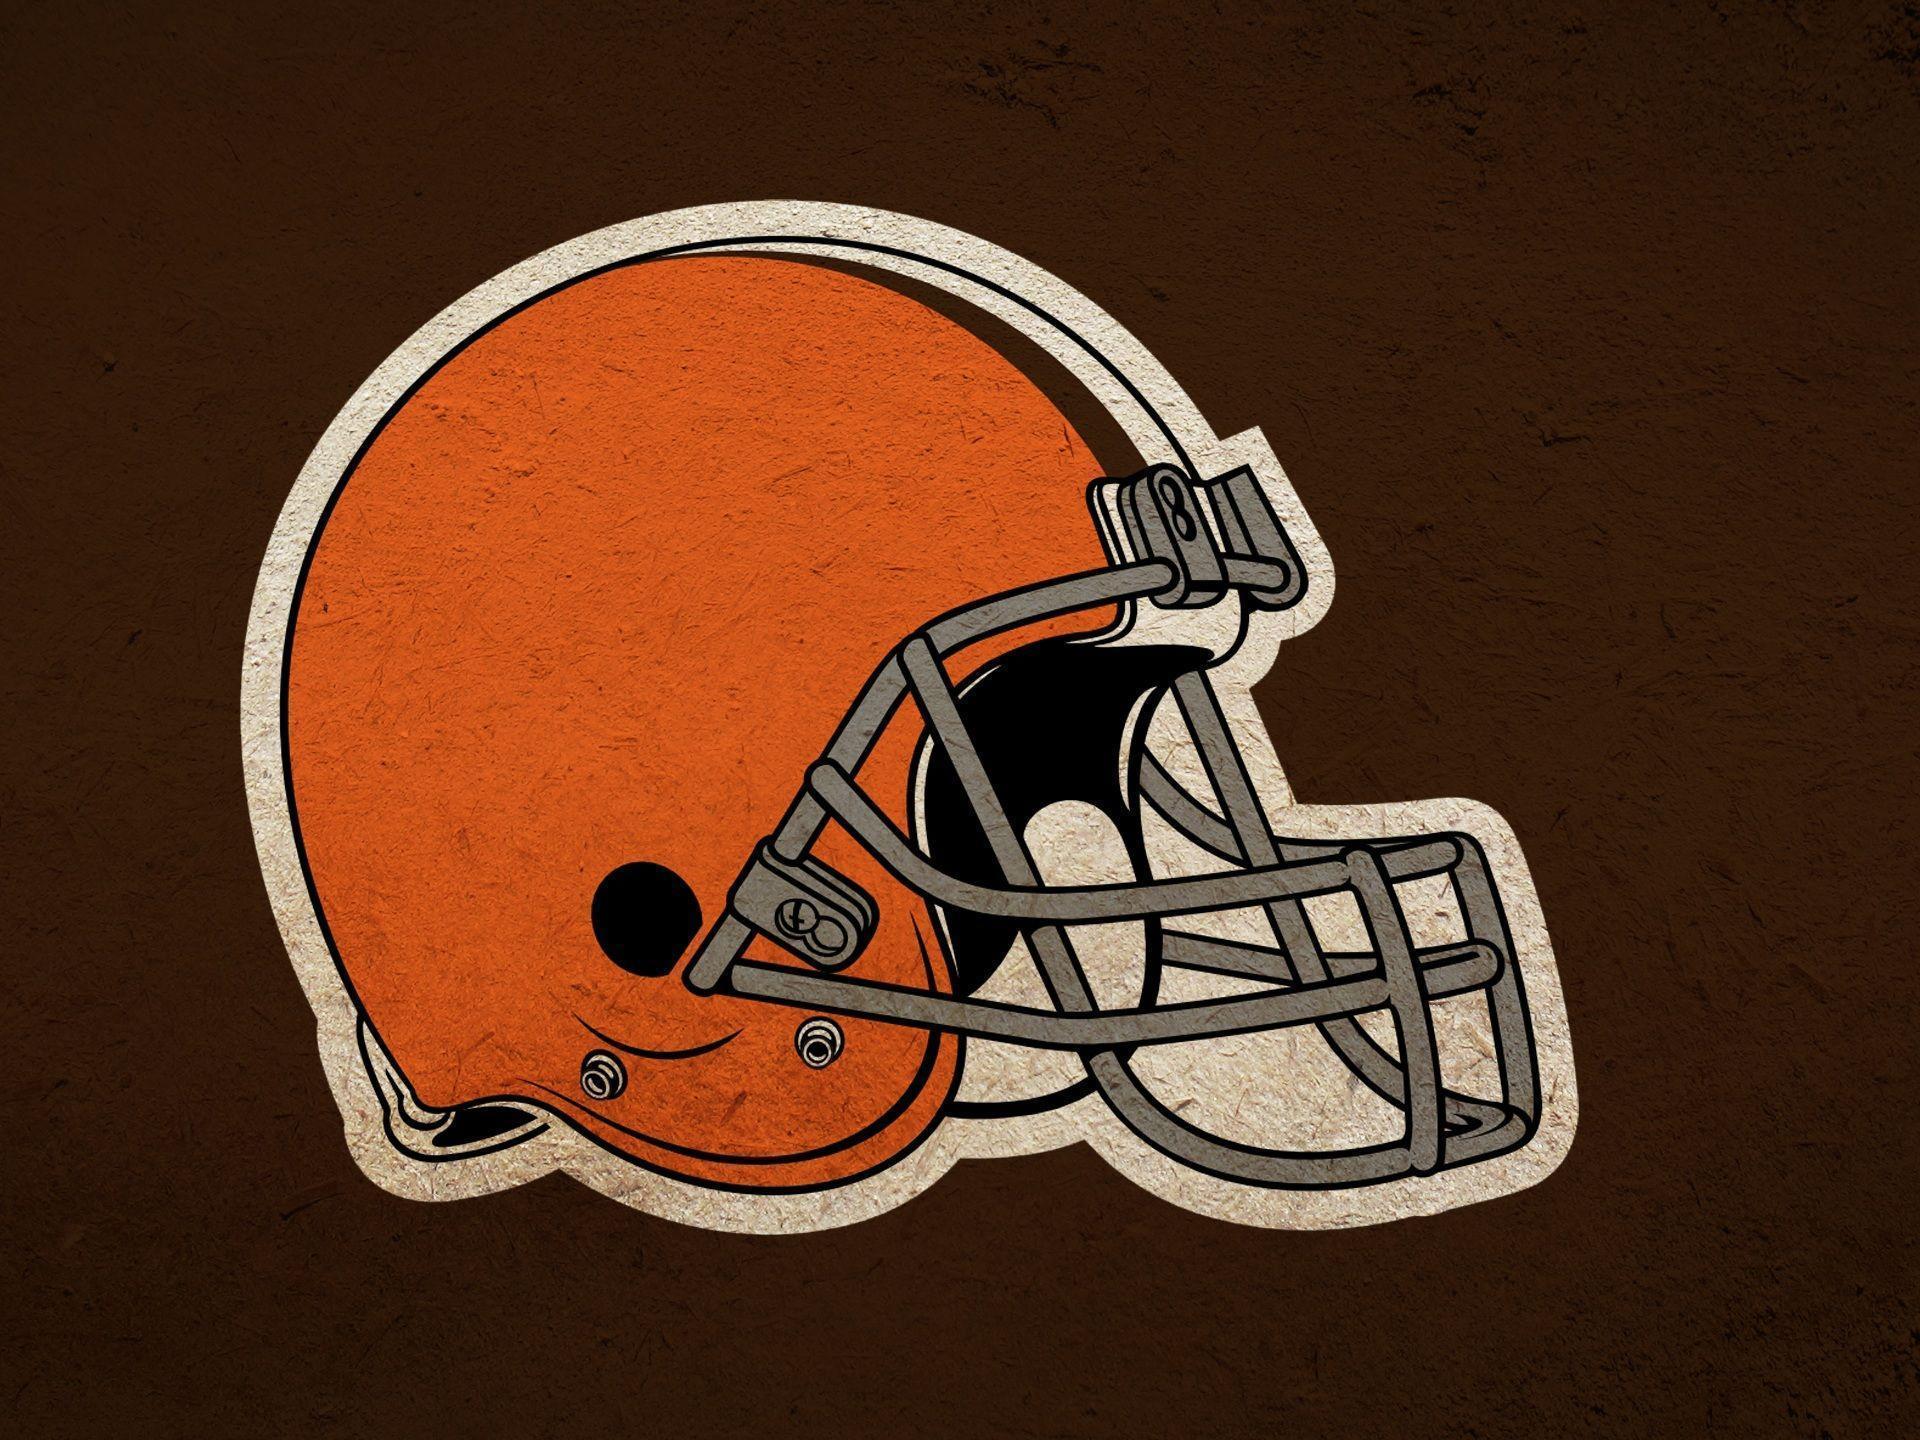 HD Cleveland Browns Wallpaper